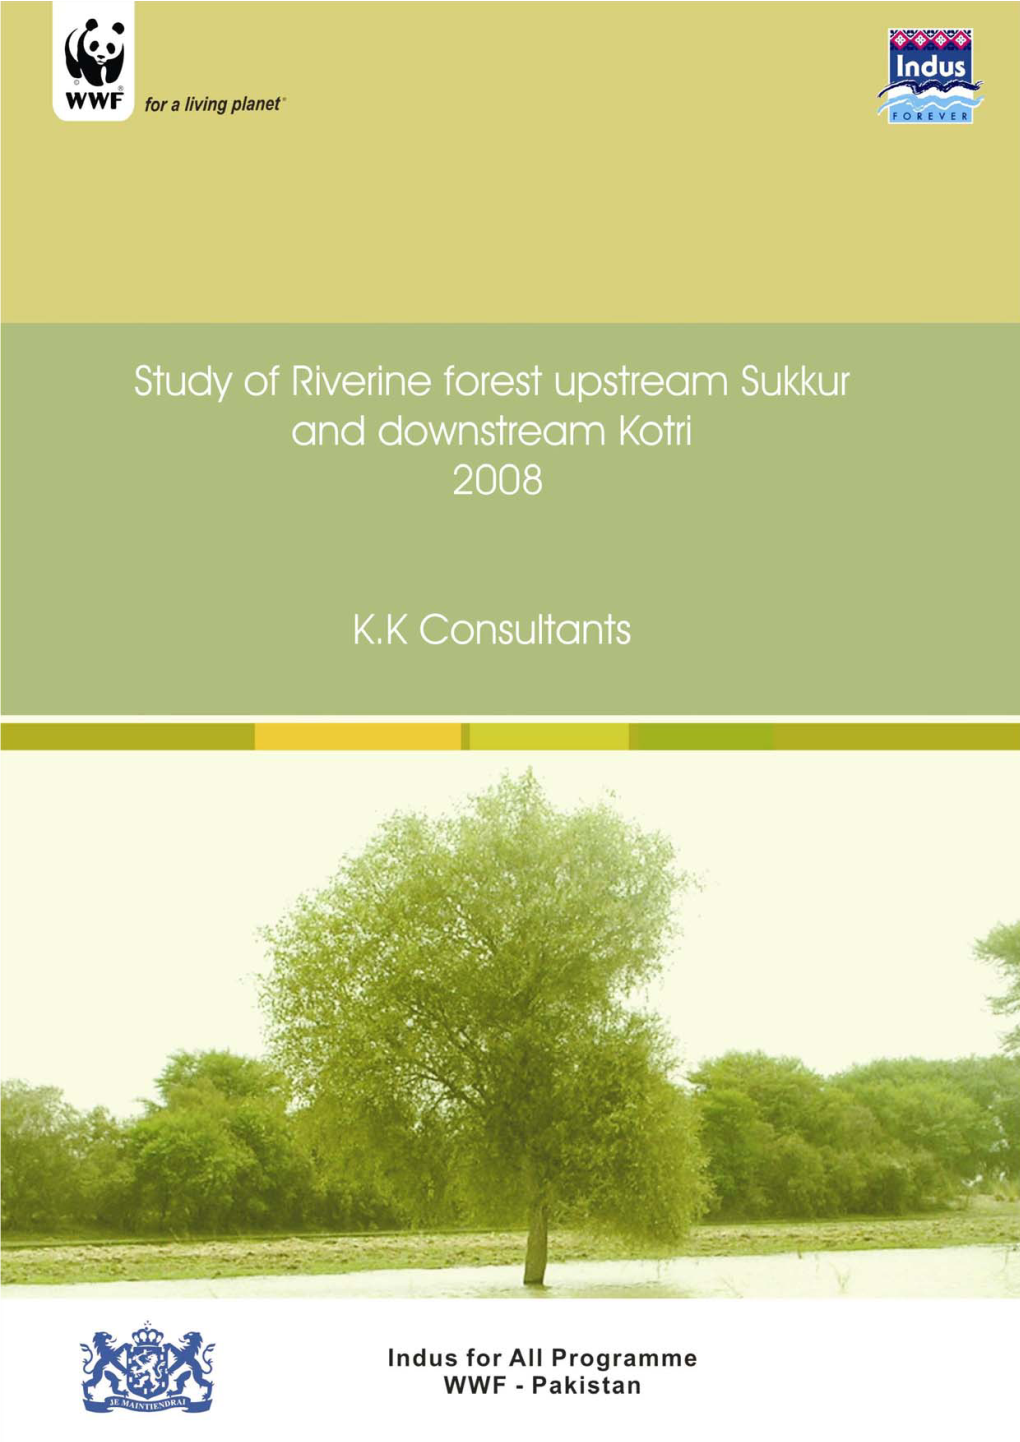 Study of Riverine Forest Upstream Sukkur and Downstream Kotri - 2008